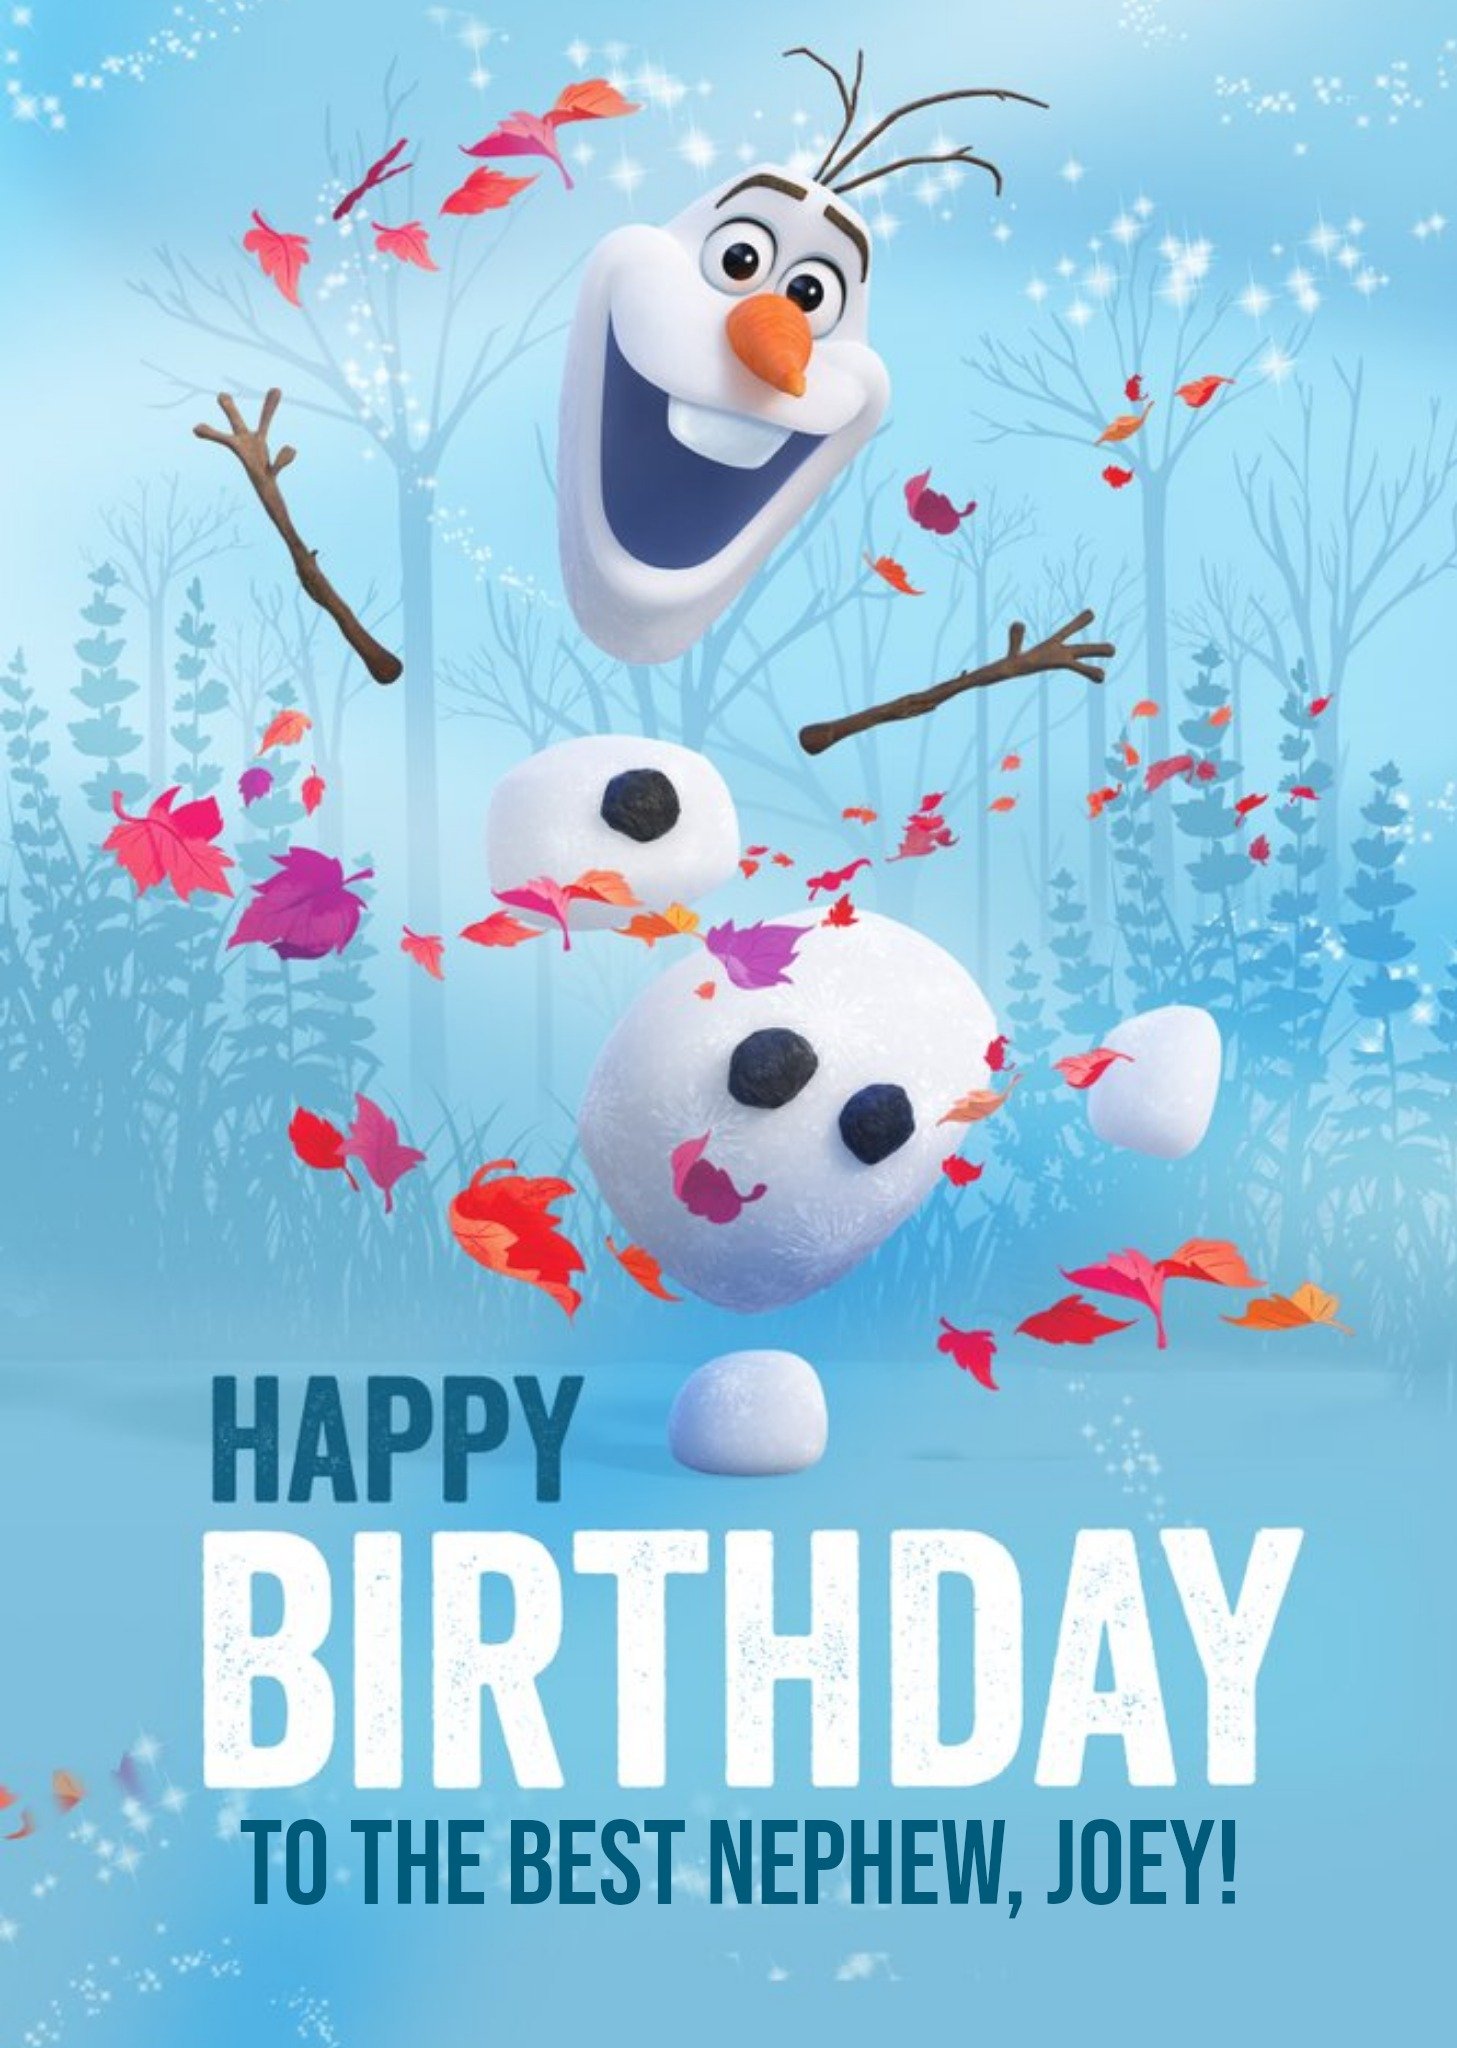 Disney Frozen 2 Olaf Best Nephew Birthday Card, Large